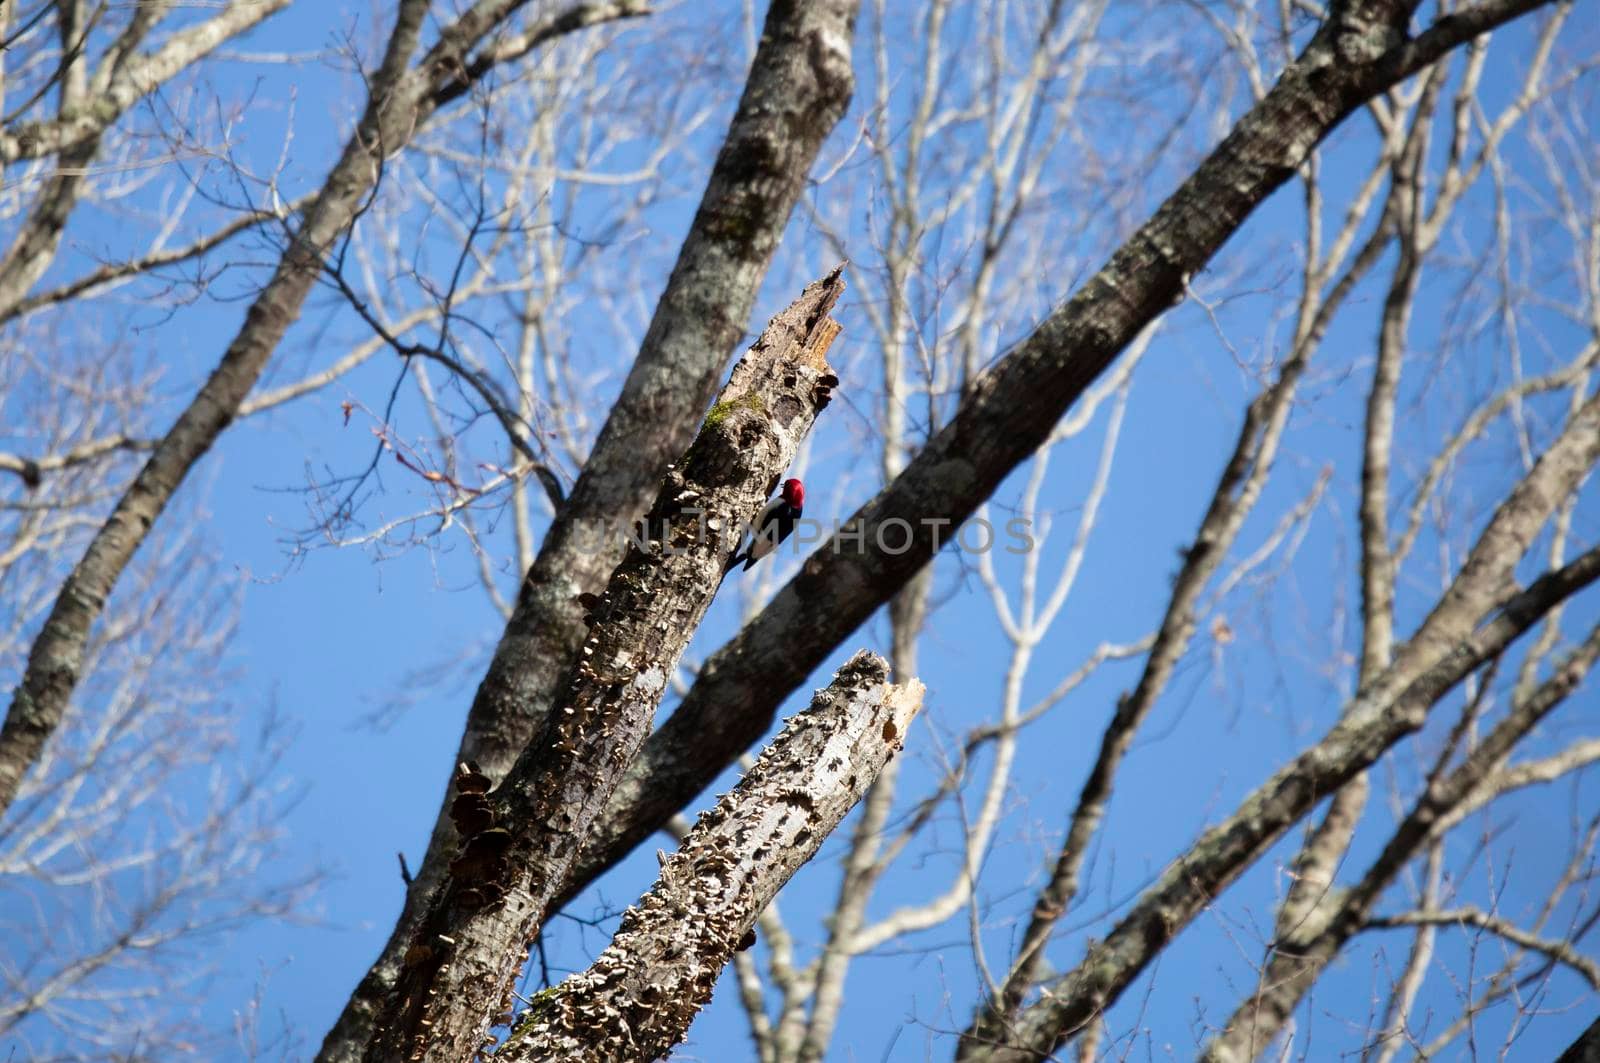 Adult redheaded woodpecker (Melanerpes erythrocephalus) foraging on a tree trunk